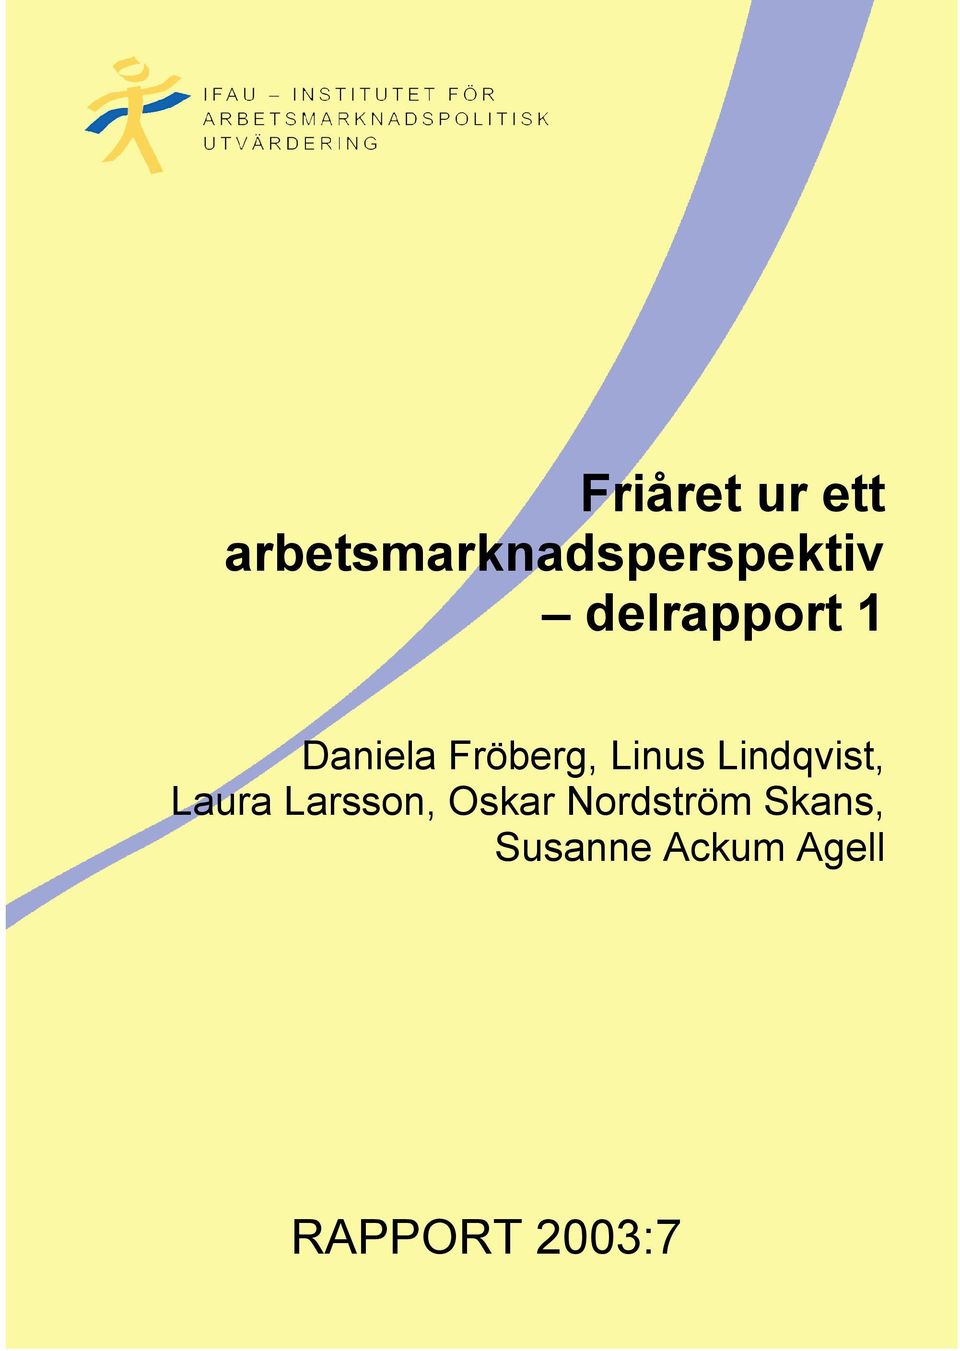 Lindqvist, Laura Larsson, Oskar